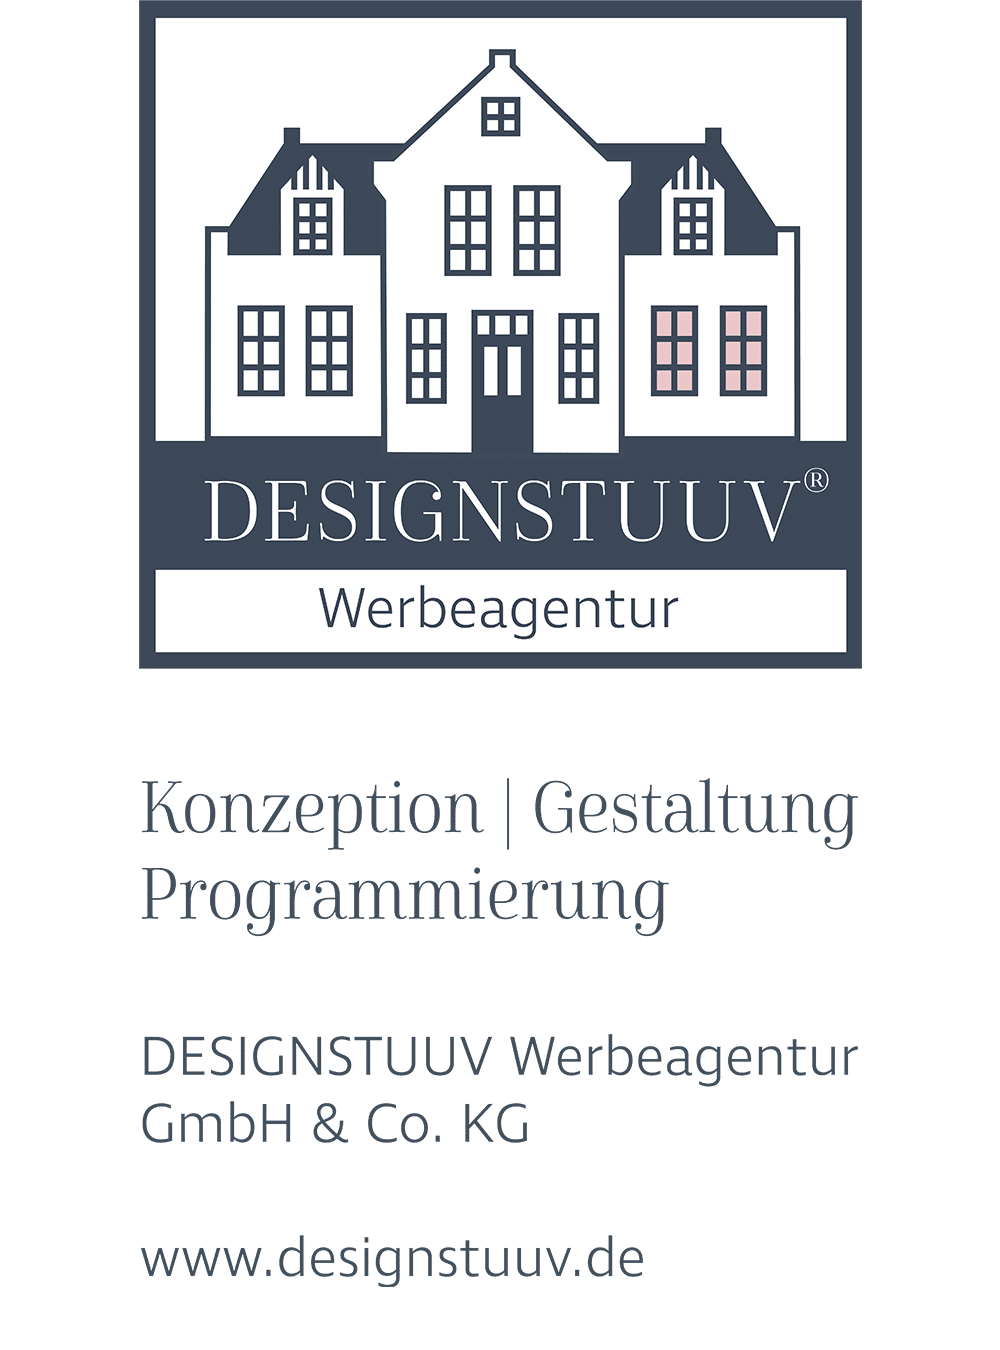 designstuuv werbeagentur logo